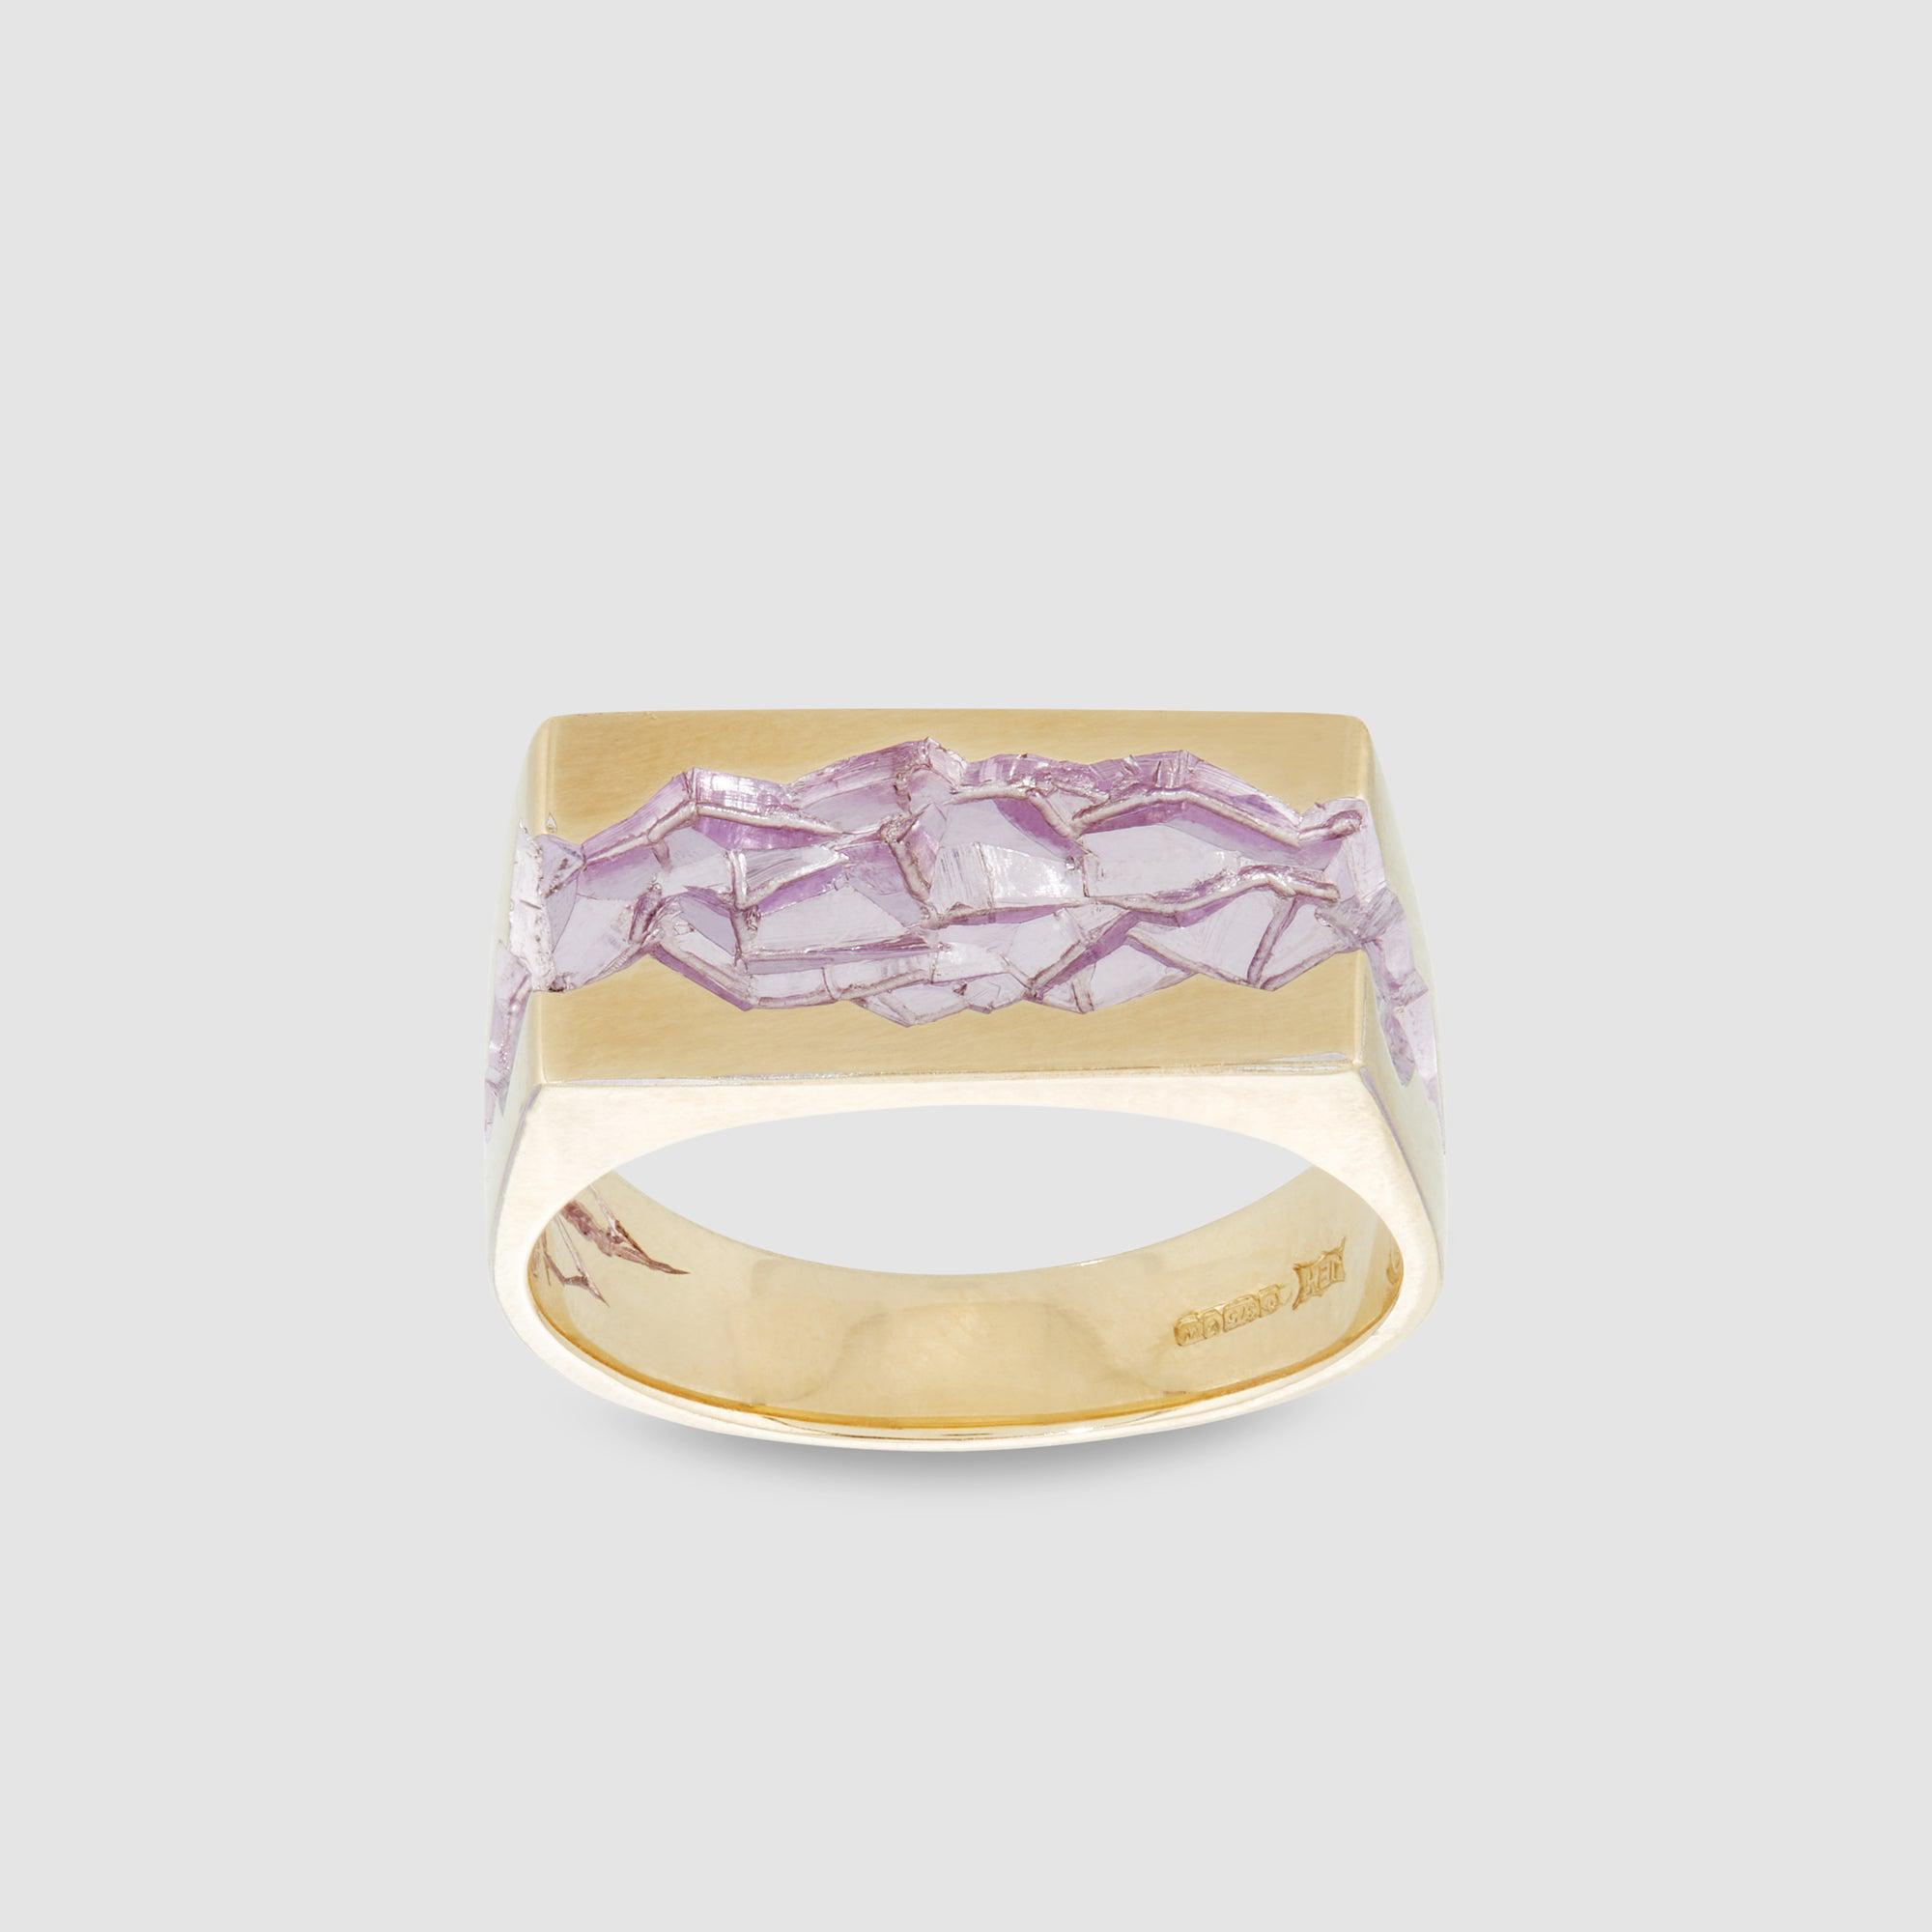 Castro Hellsgate Pink Ceramic Ring by CASTRO